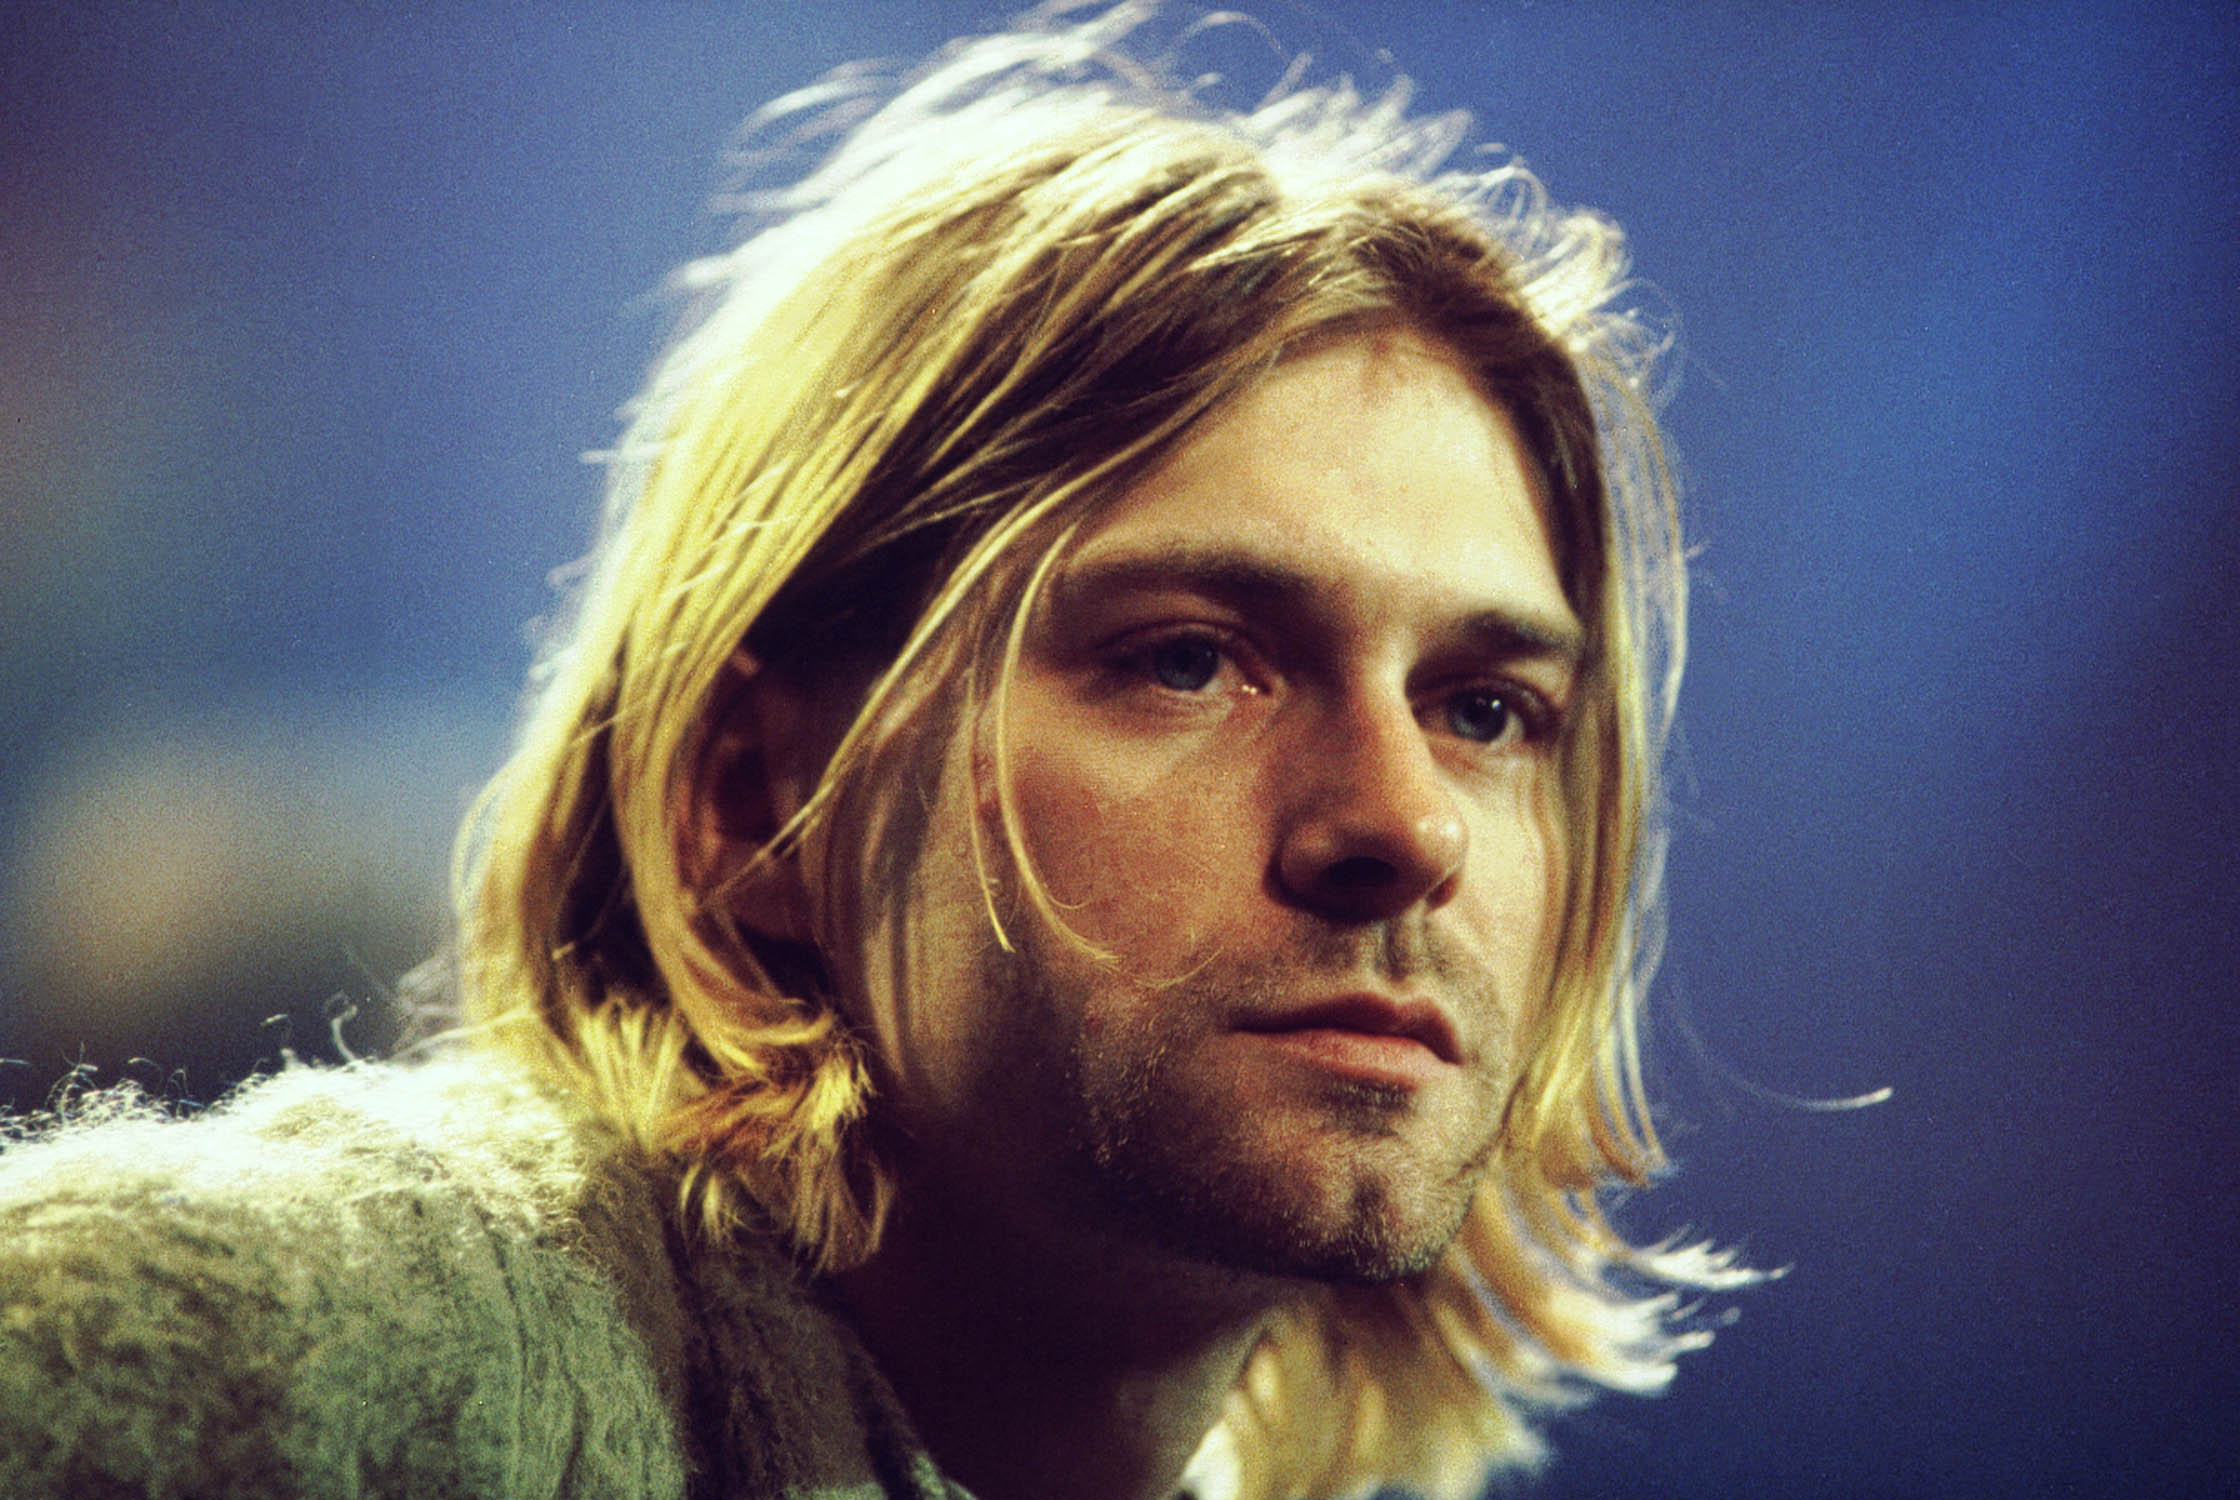 Kurt Cobain of Nirvana wearing a sweater